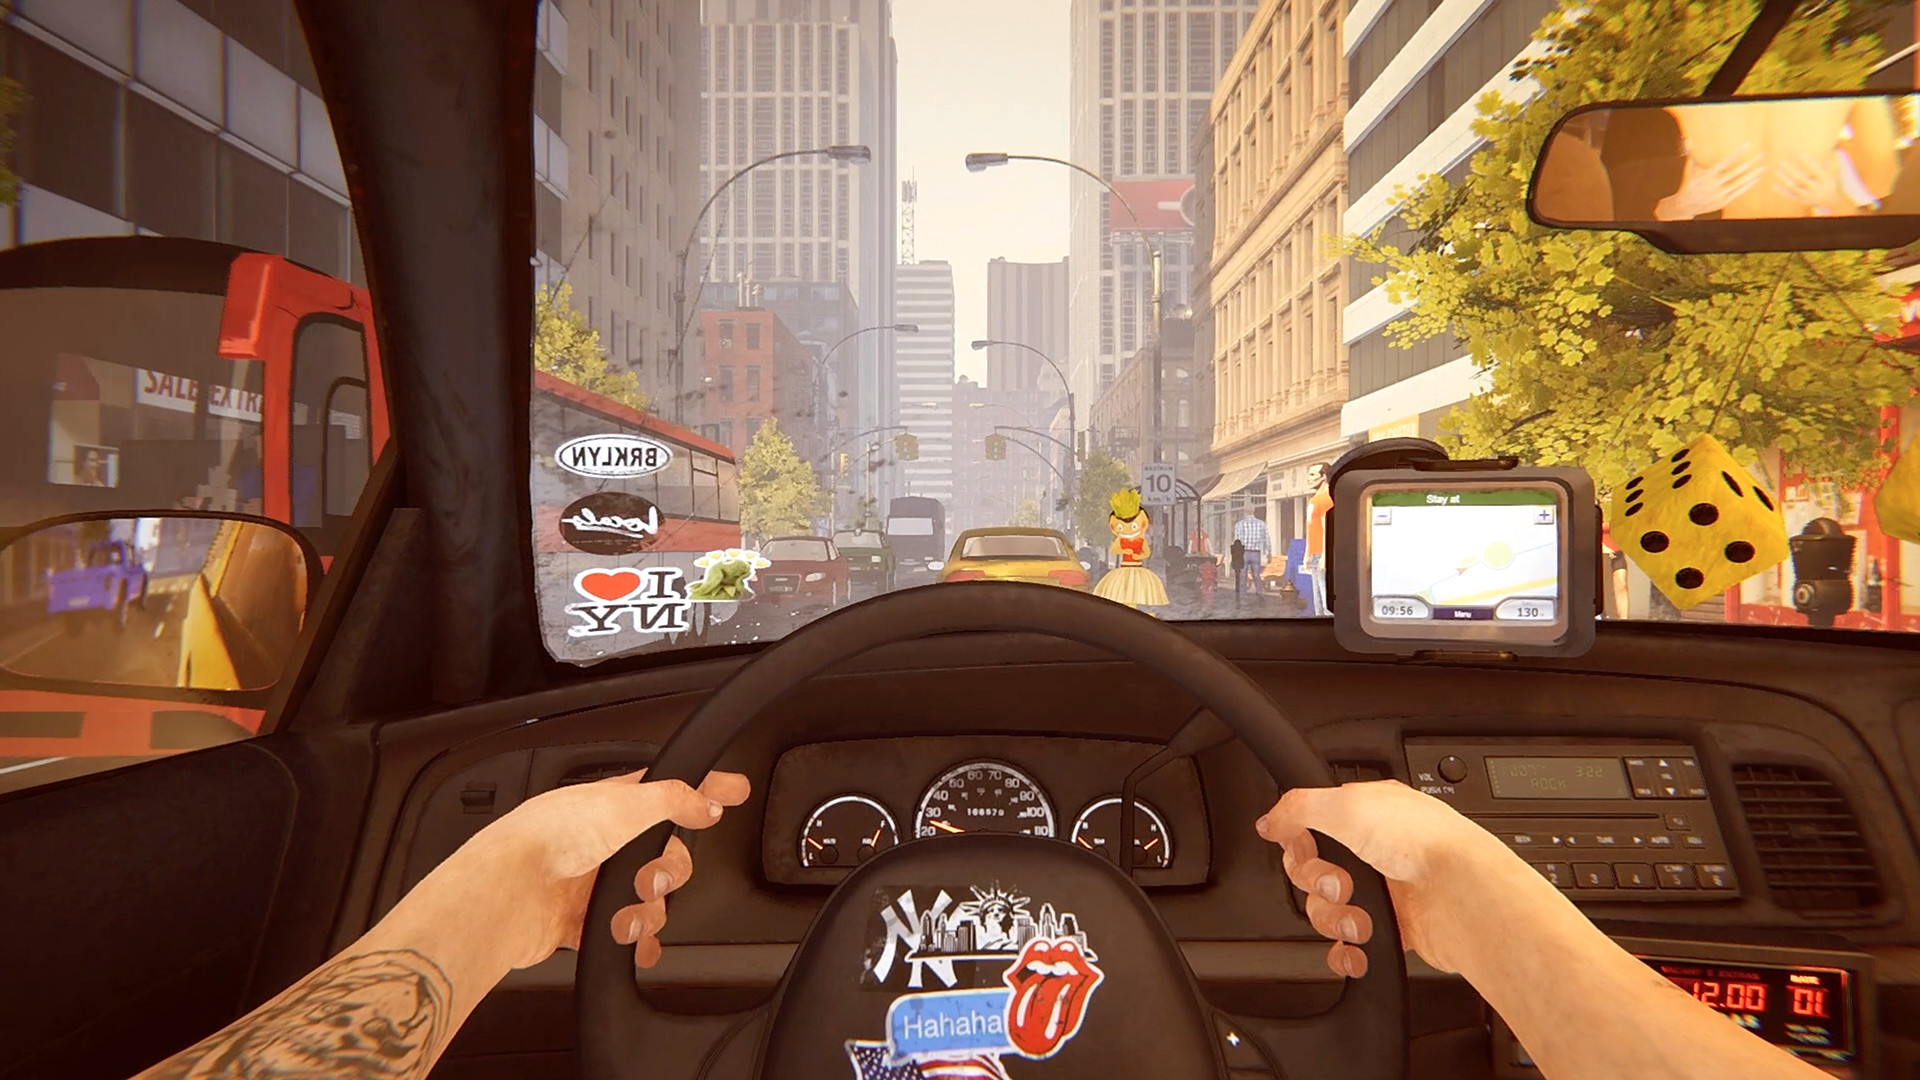 Taxi Simulator On Steam - video roblox taxi simulator 2 ending 2 taxi simulator 2 wiki